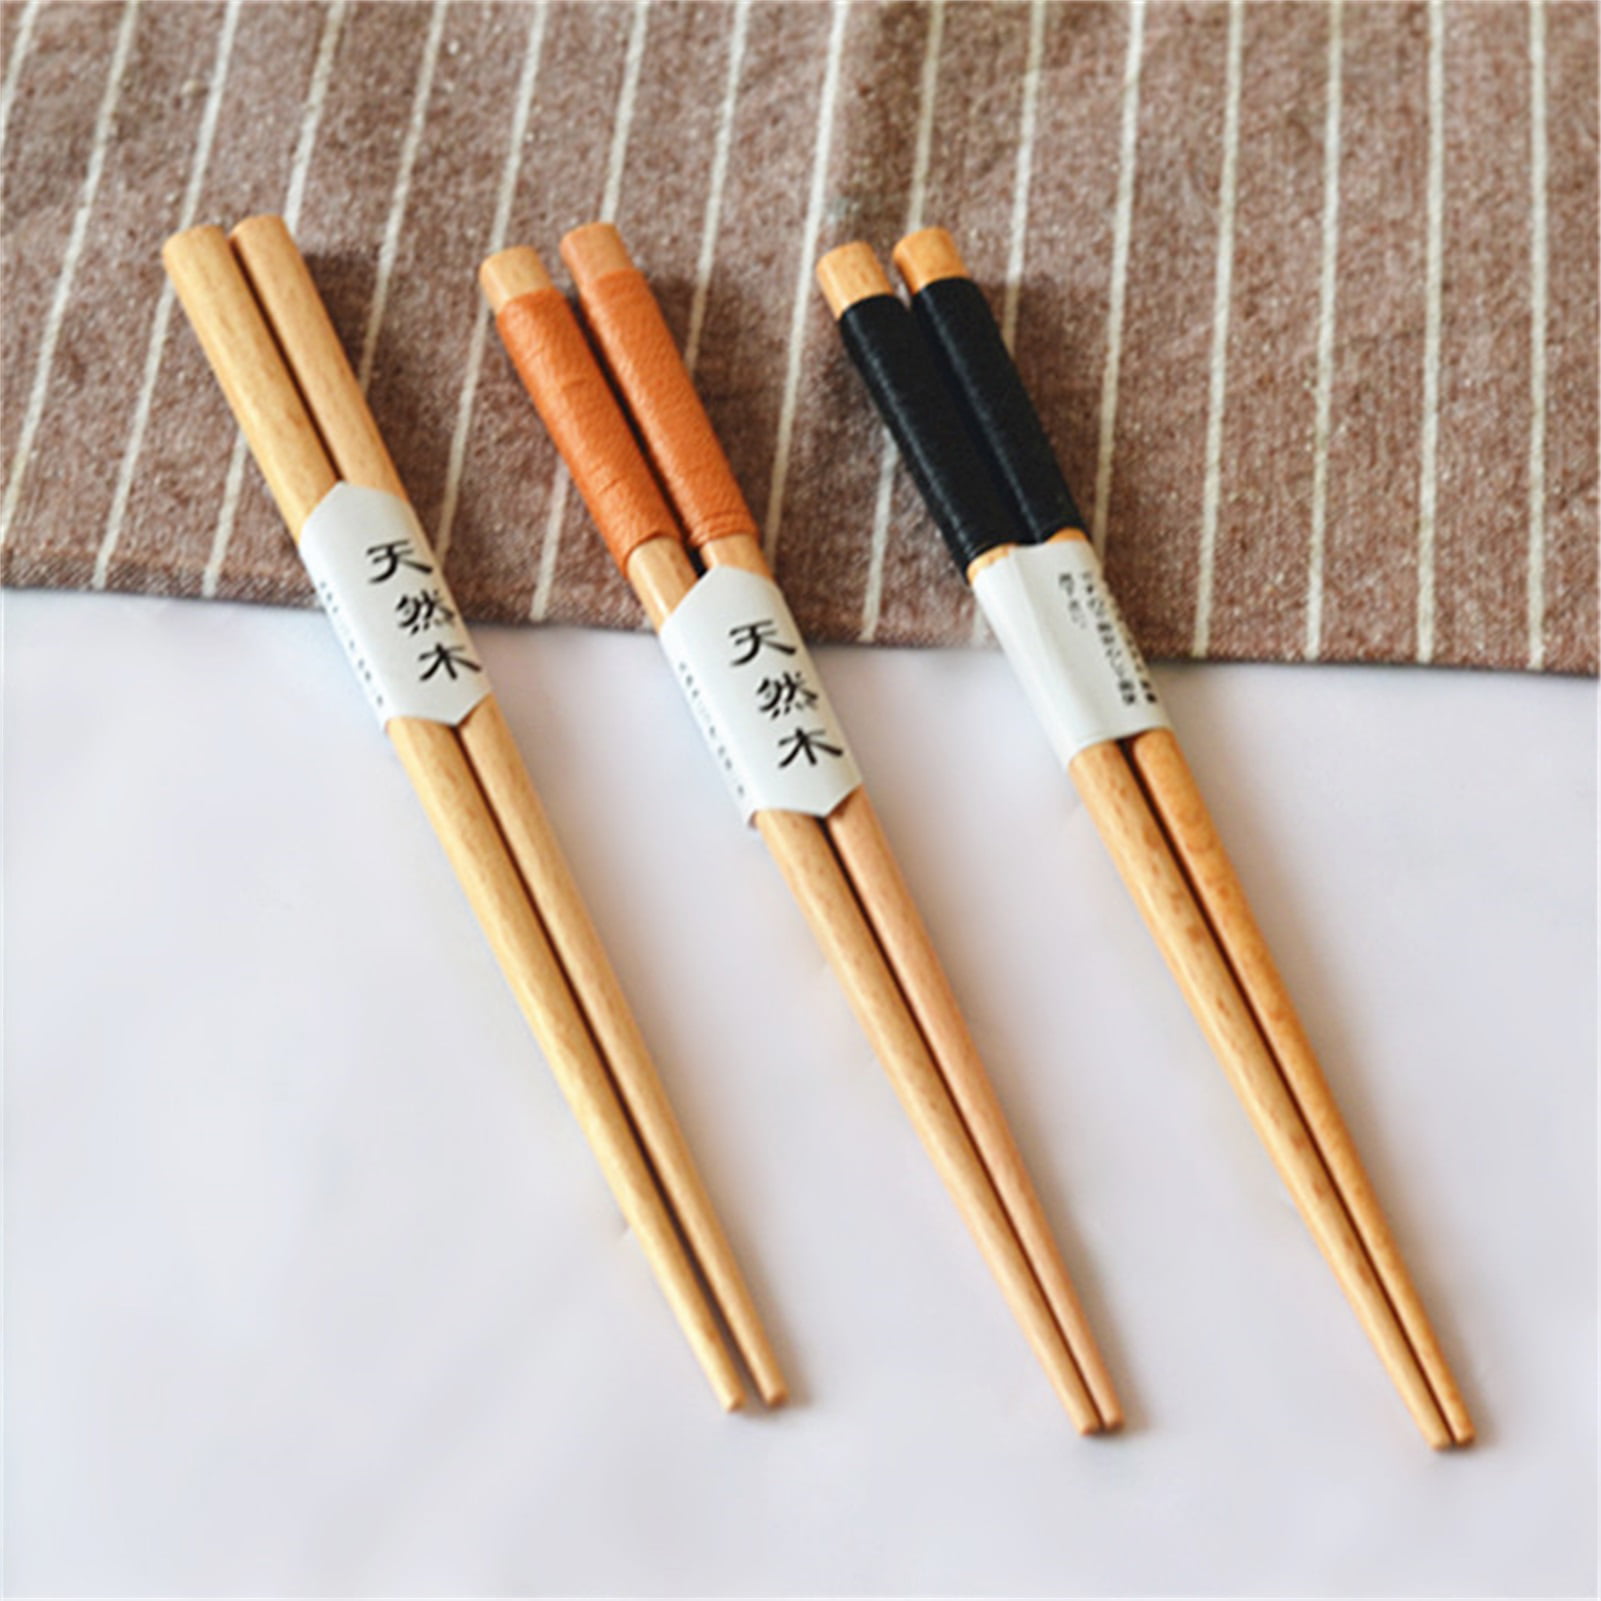 5 Pairs Natural Wood Handmade Chinese Chopsticks Value Dinner Reusable Gift 